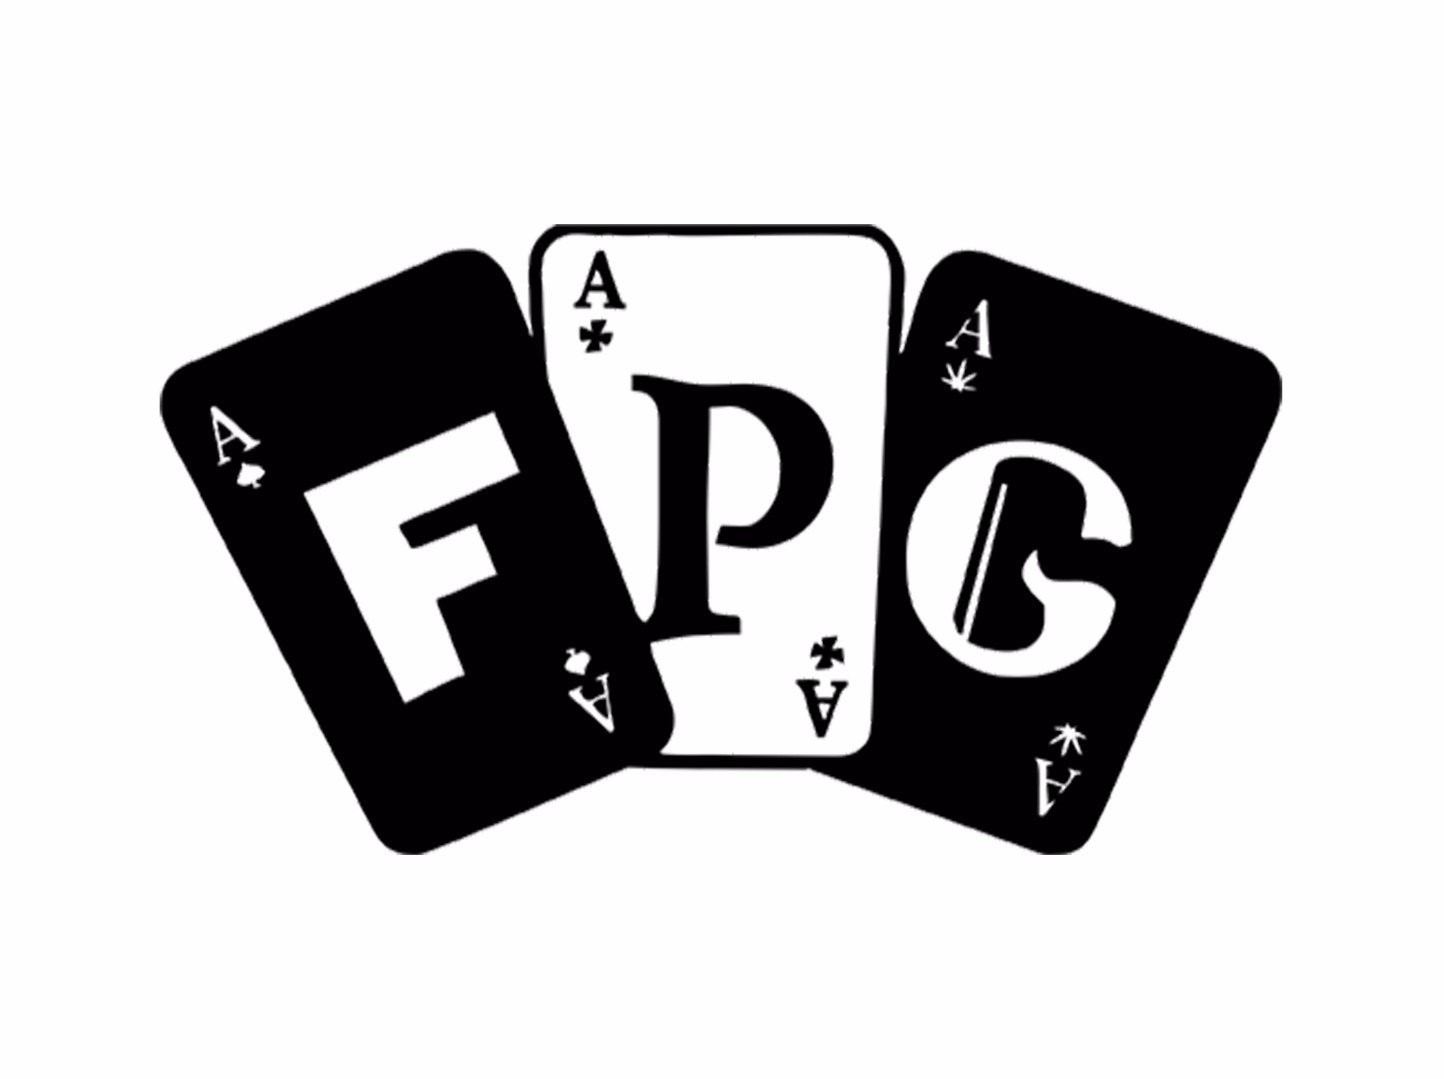 C f group. FPG эмблема. Группа f.p.g логотип. Нашивка FPG. FPG флаг.